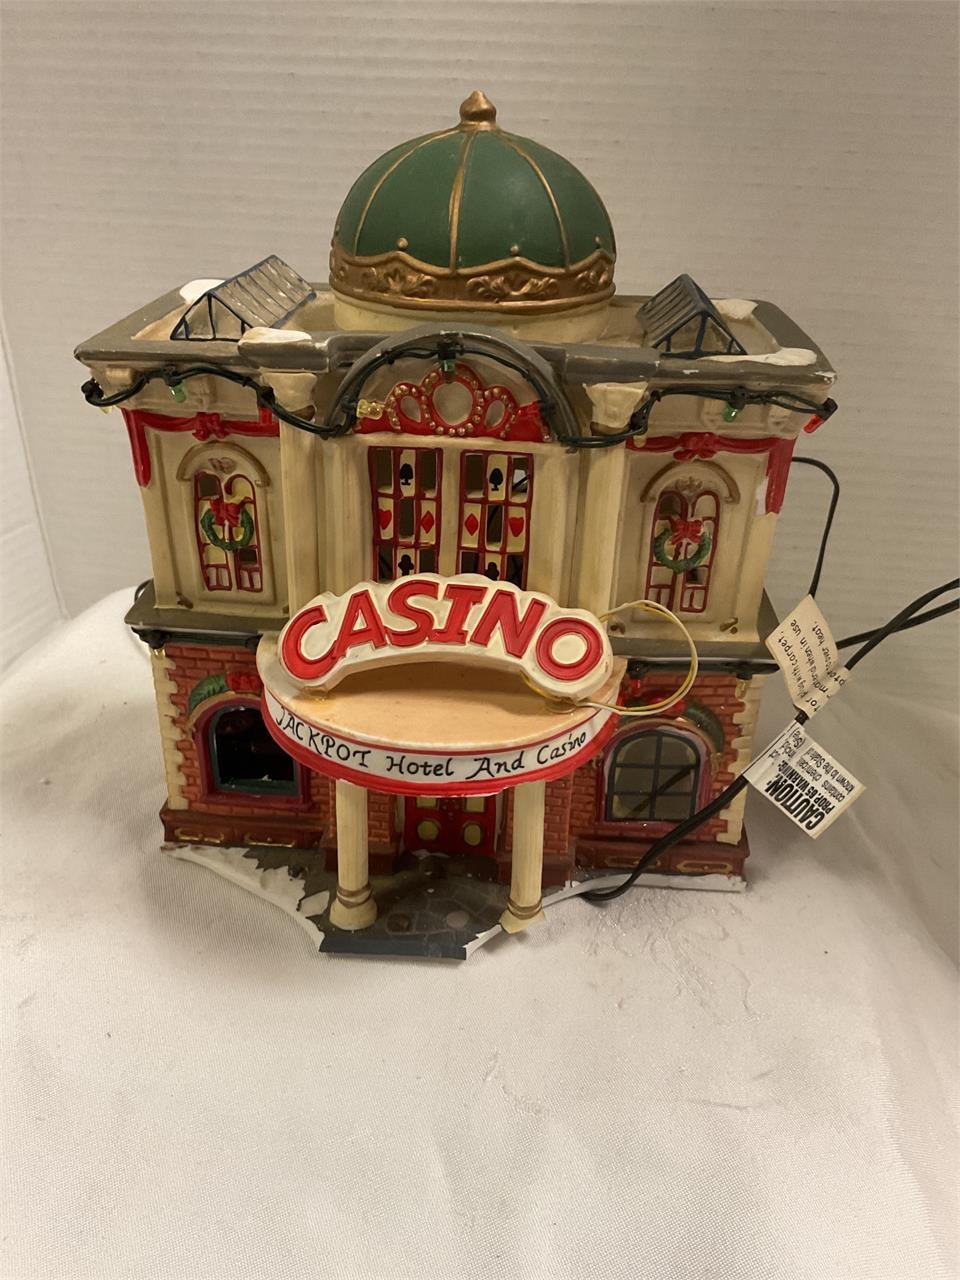 Ceramic holiday Casino,sign is broke off